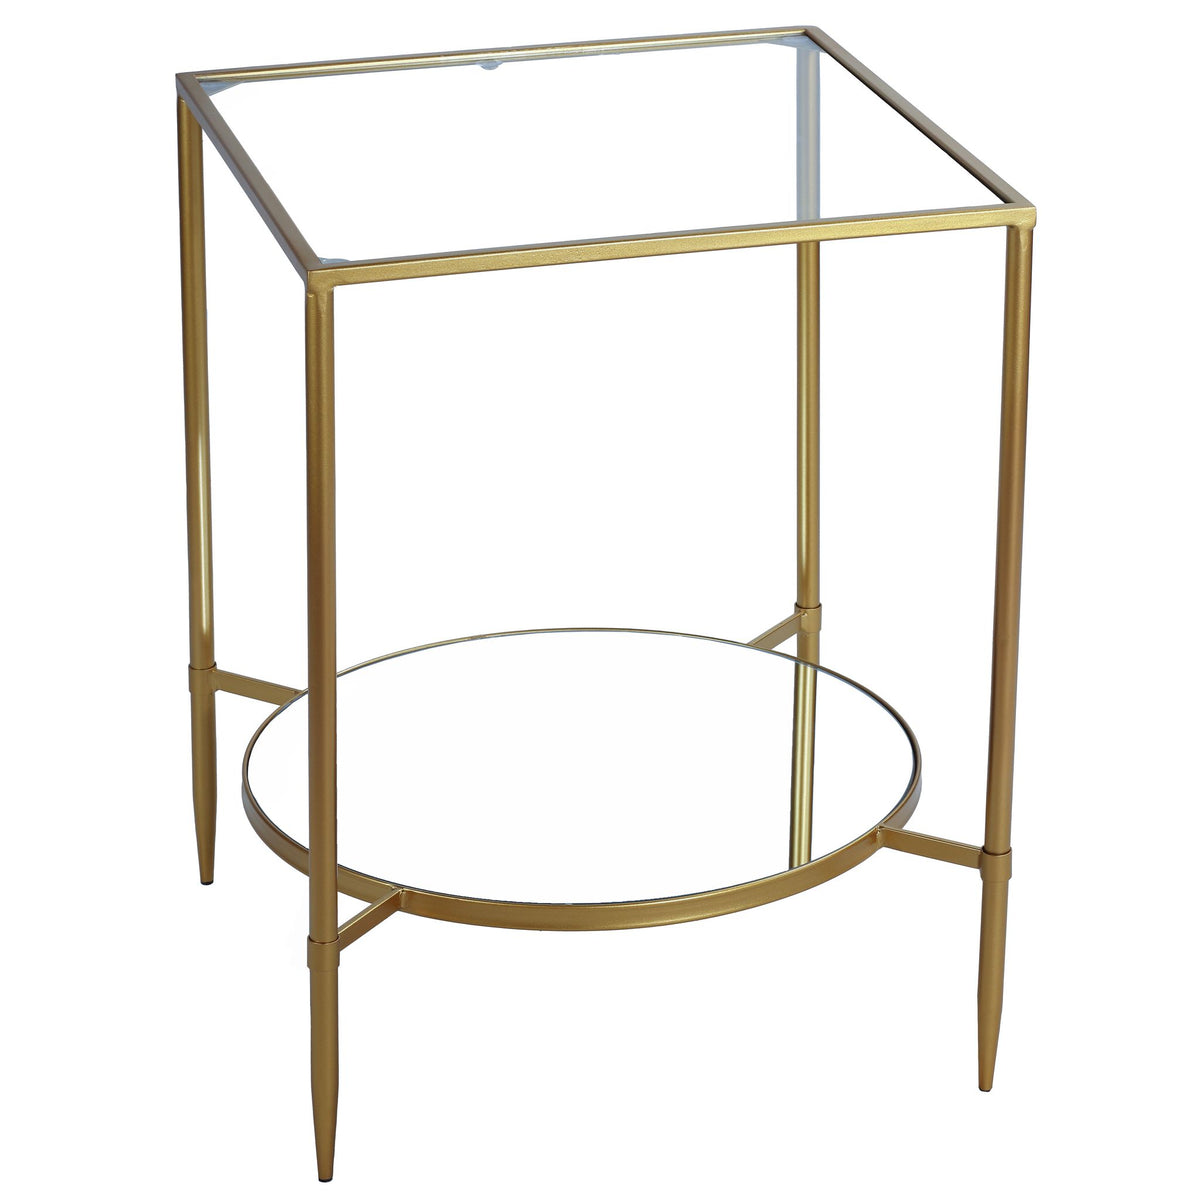 Cortesi Home Johan Square Glass End Table with Mirror Shelf, Gold Metal Frame